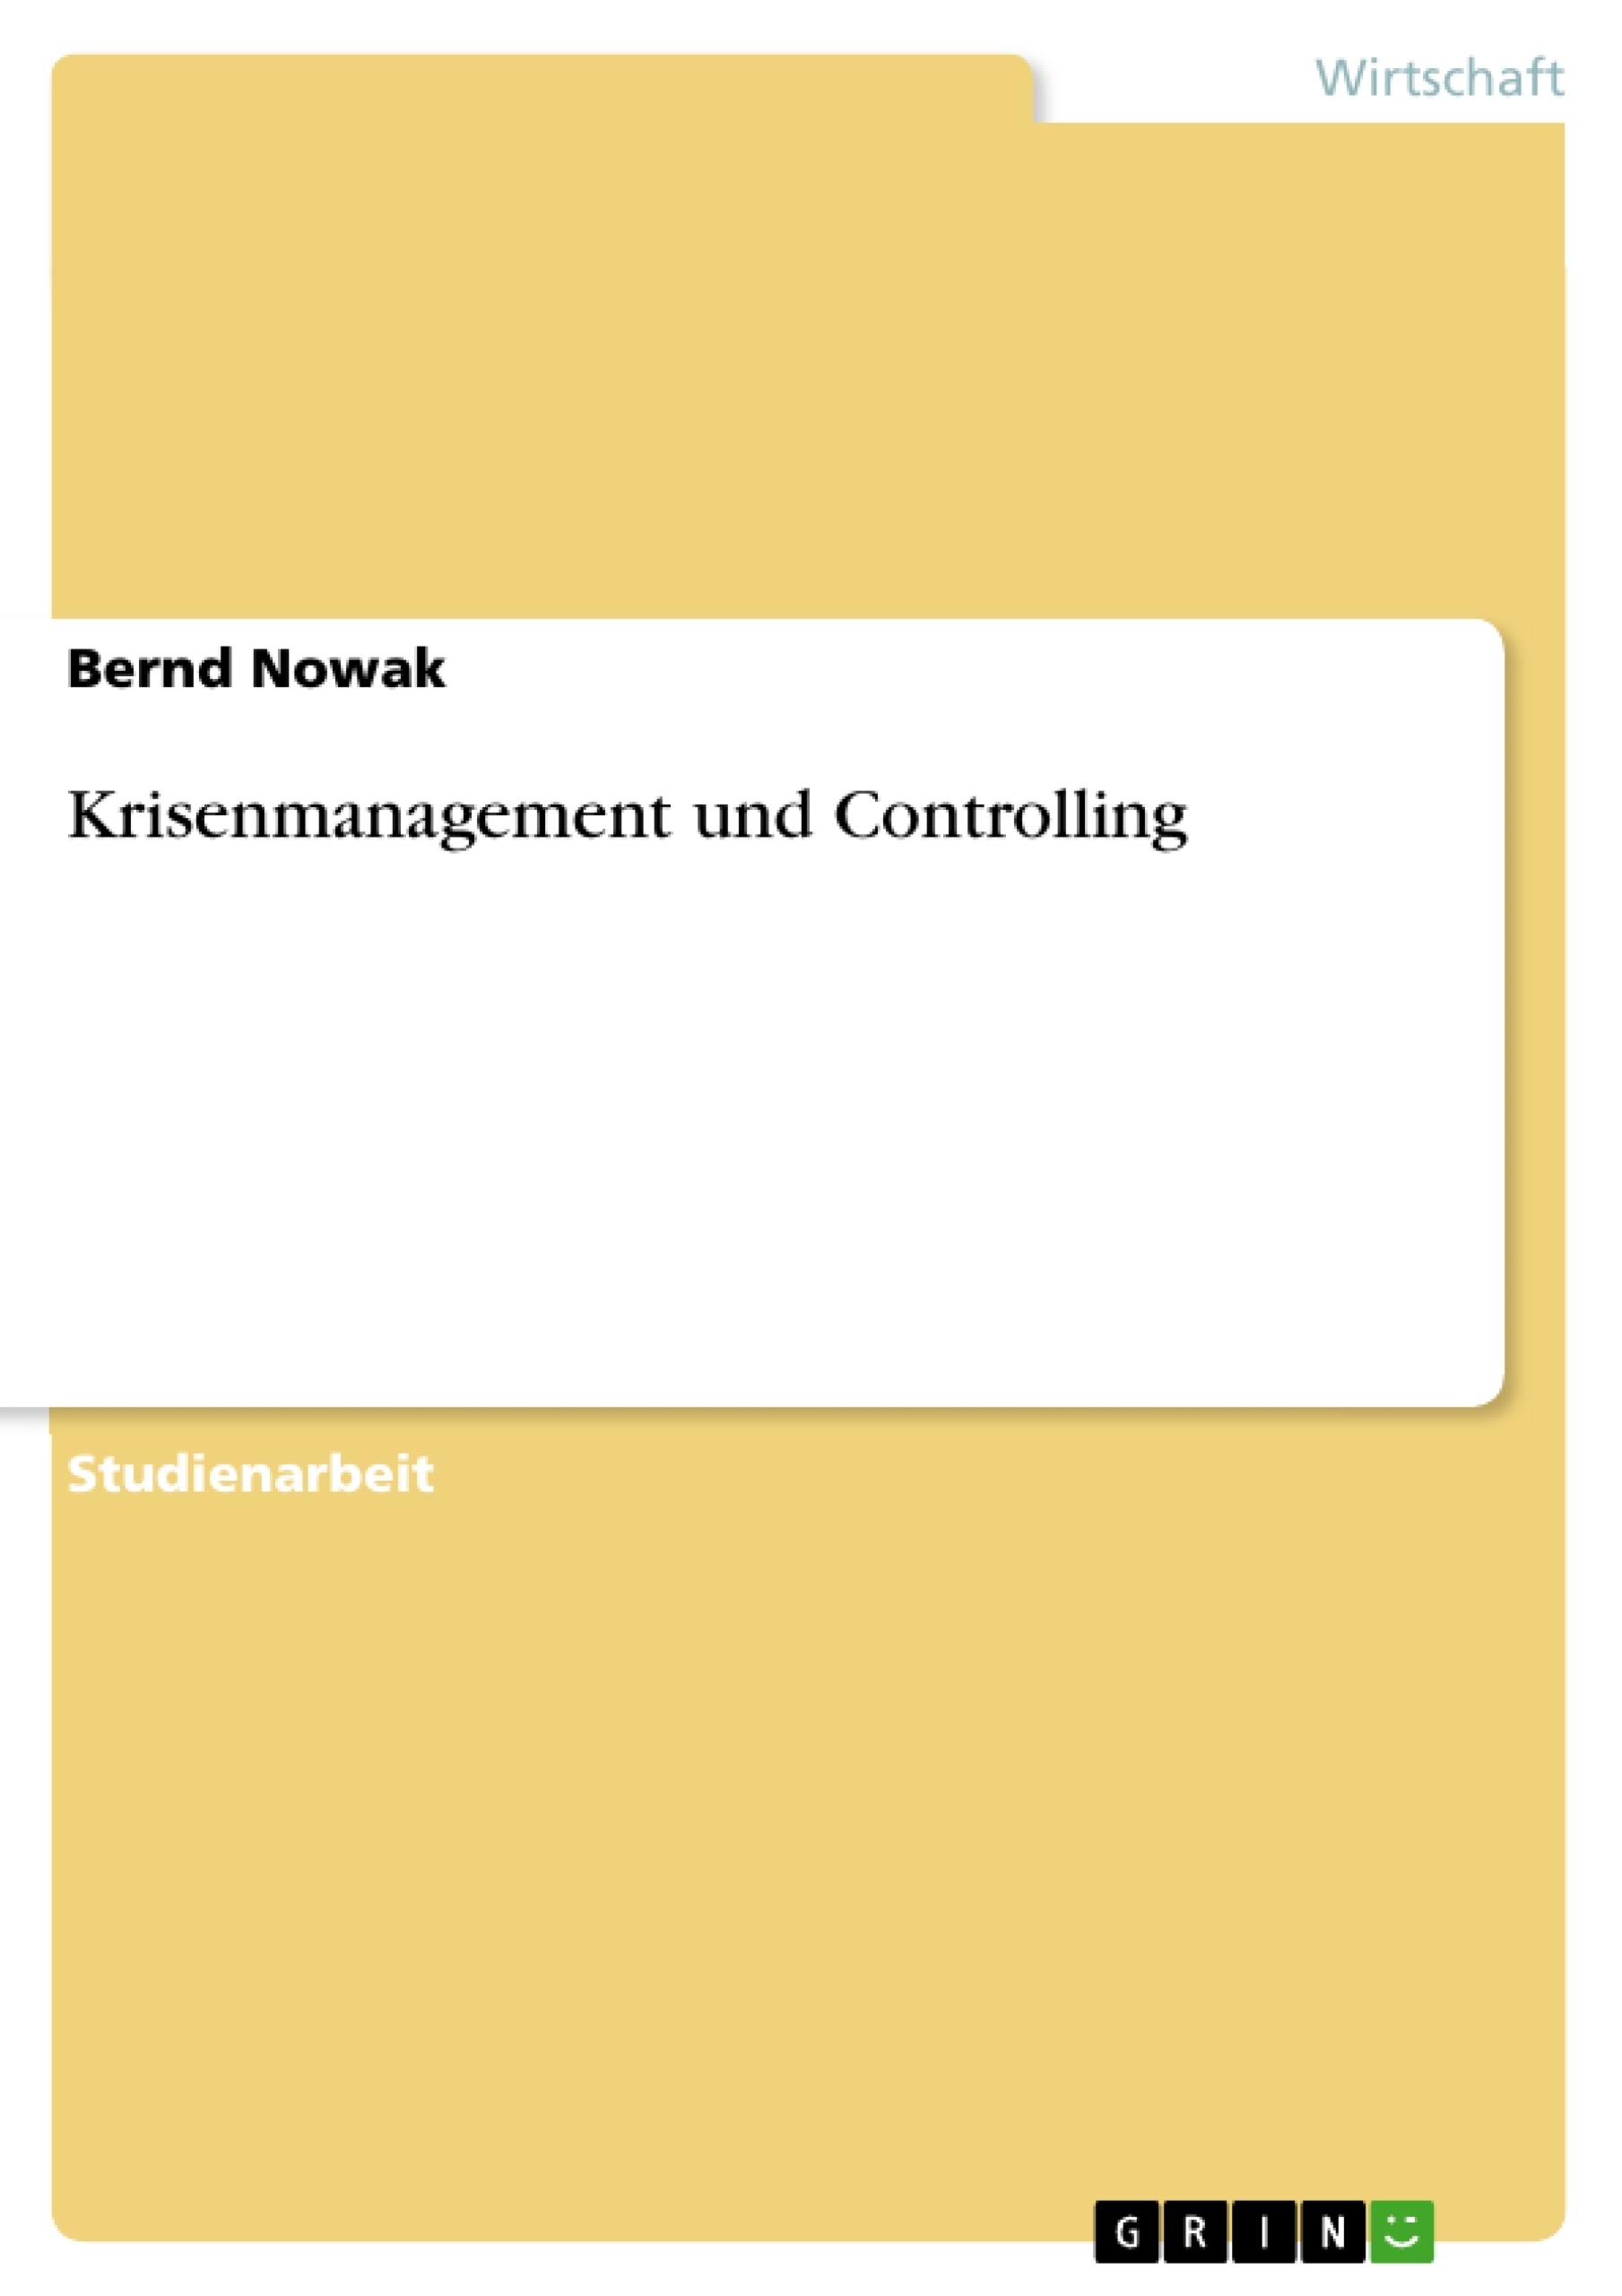 Title: Krisenmanagement und Controlling